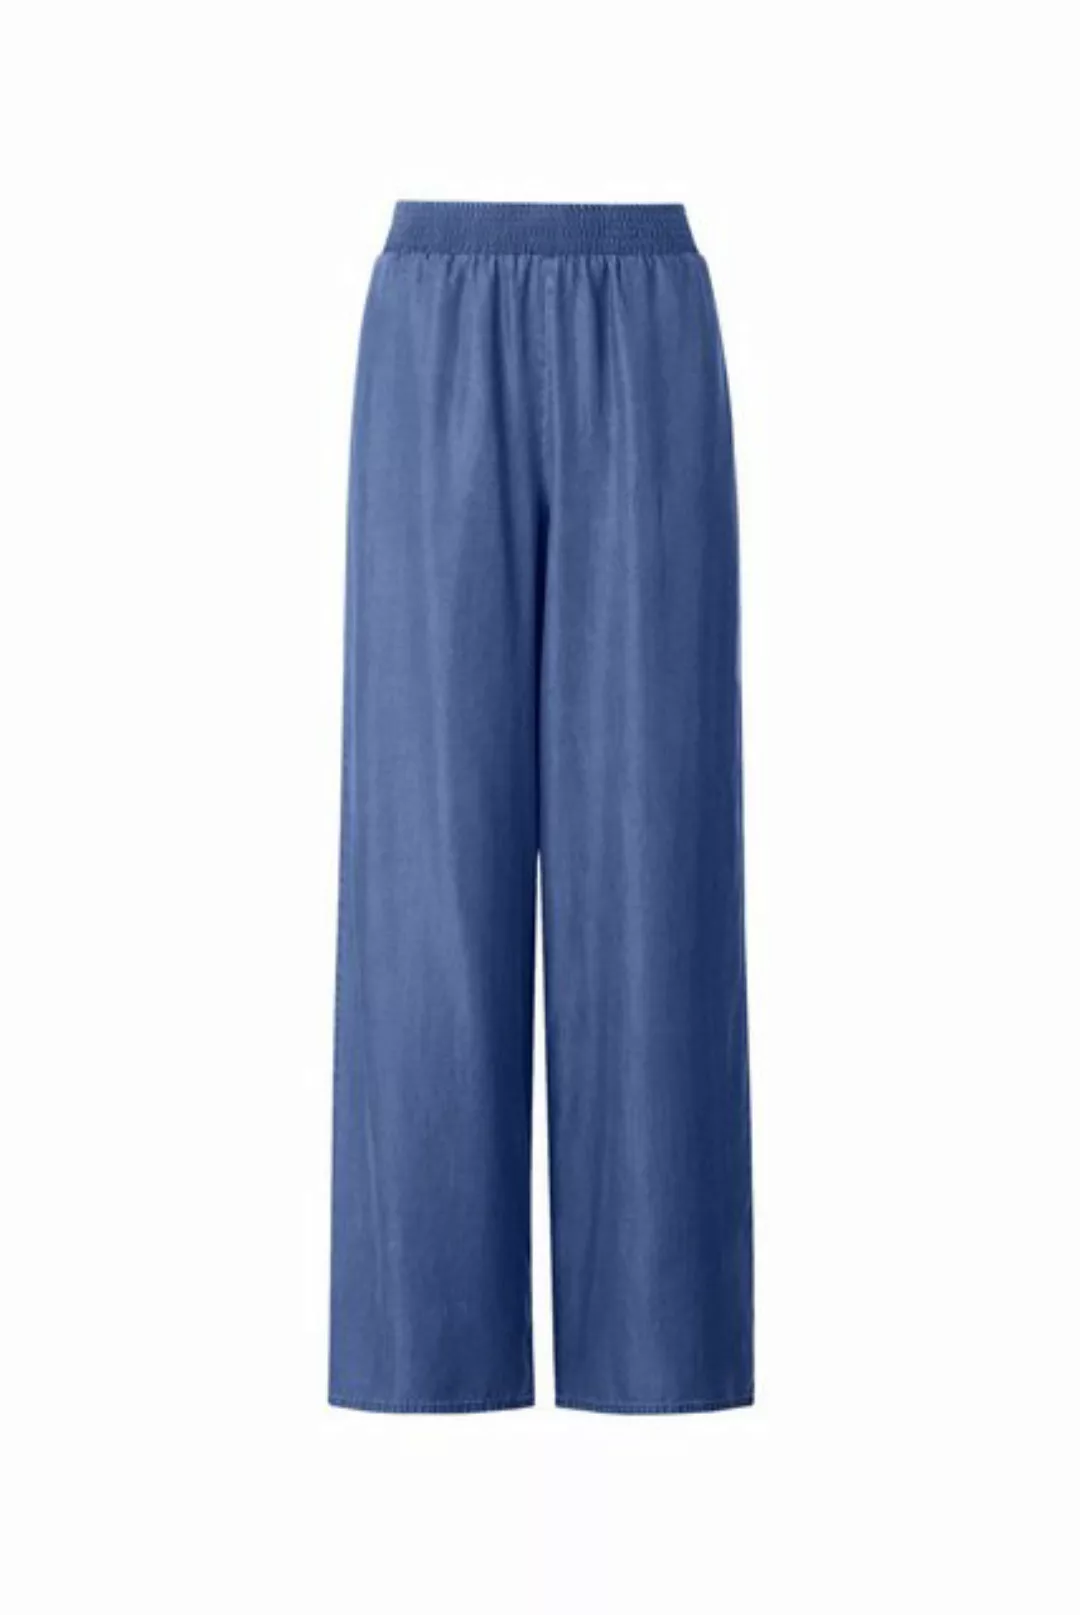 Rich & Royal Stoffhose Blue Pants, denim blue günstig online kaufen